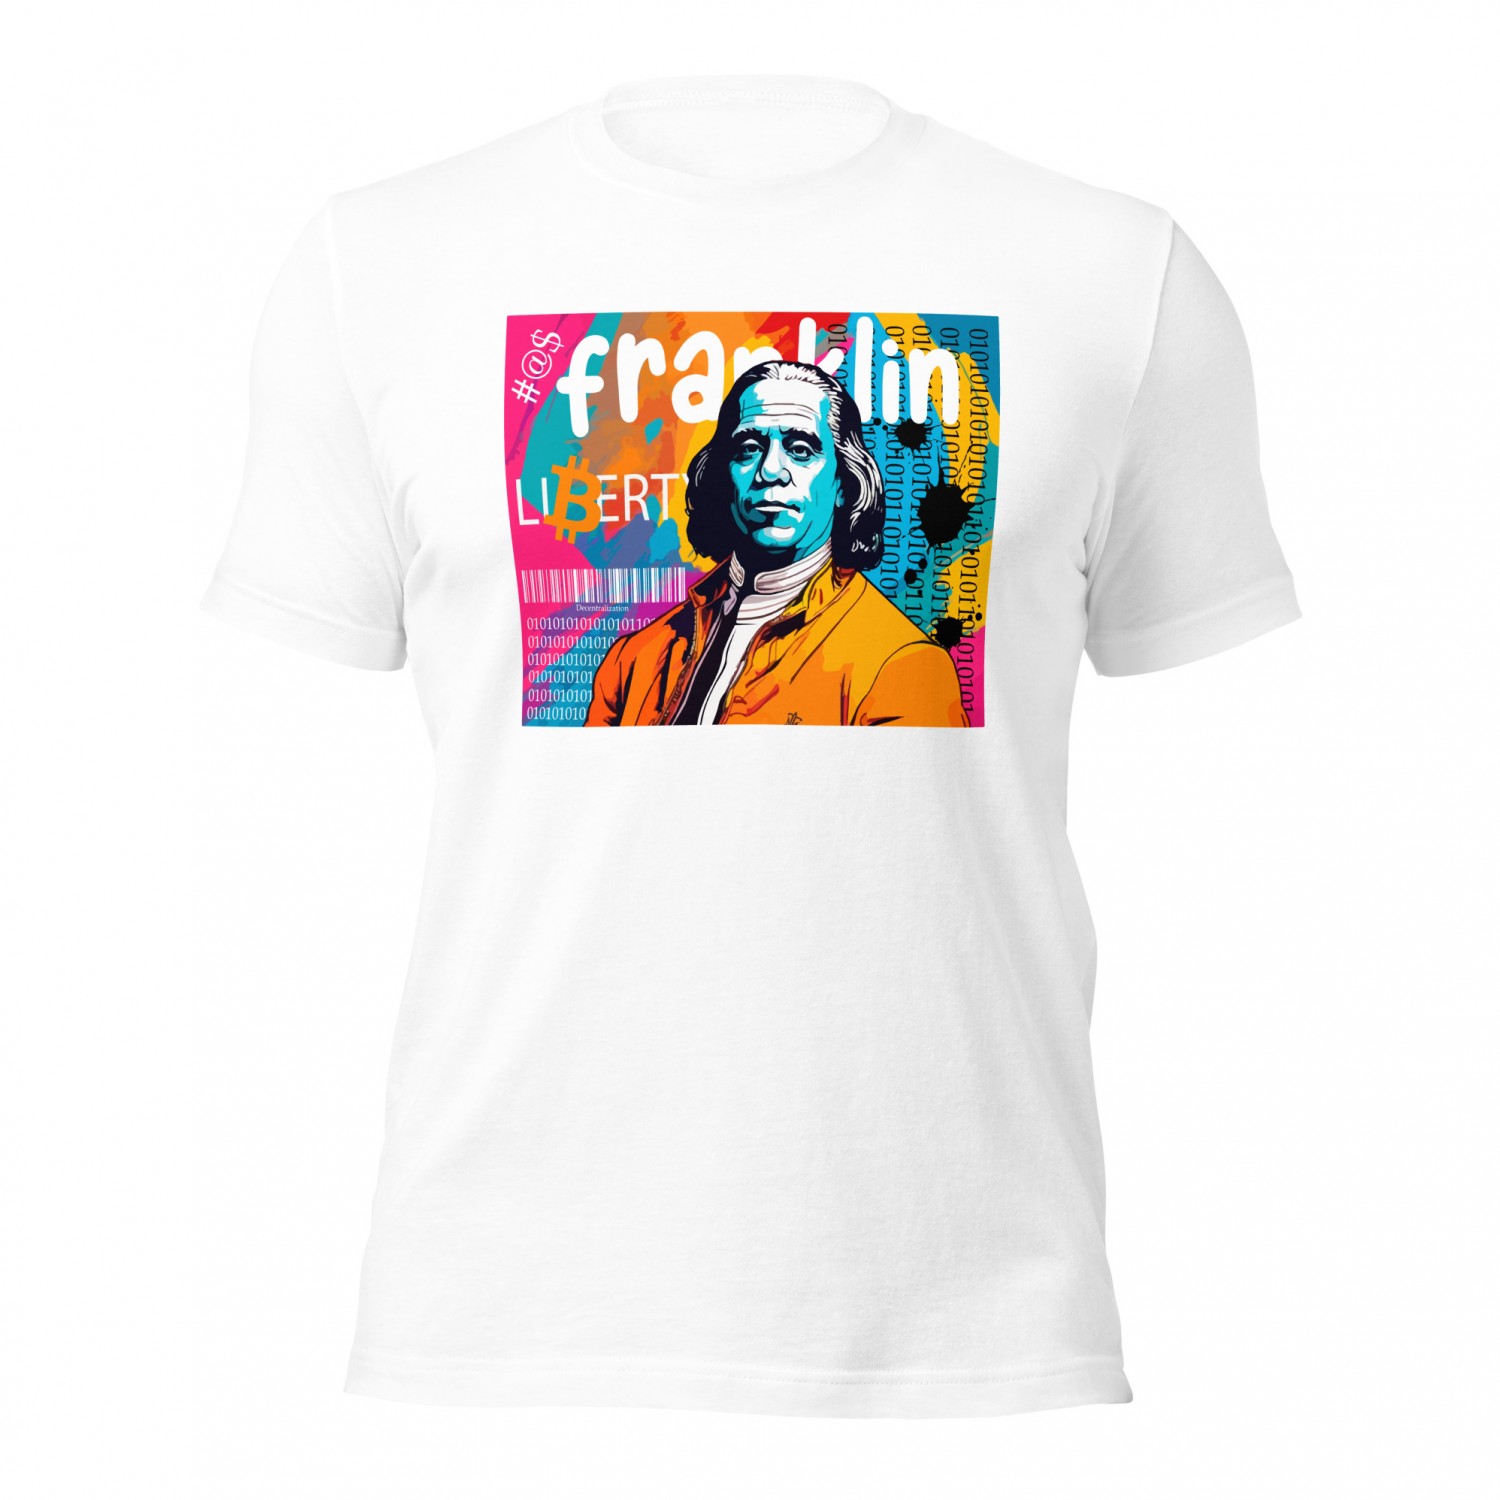 Buy Franklin t-shirt